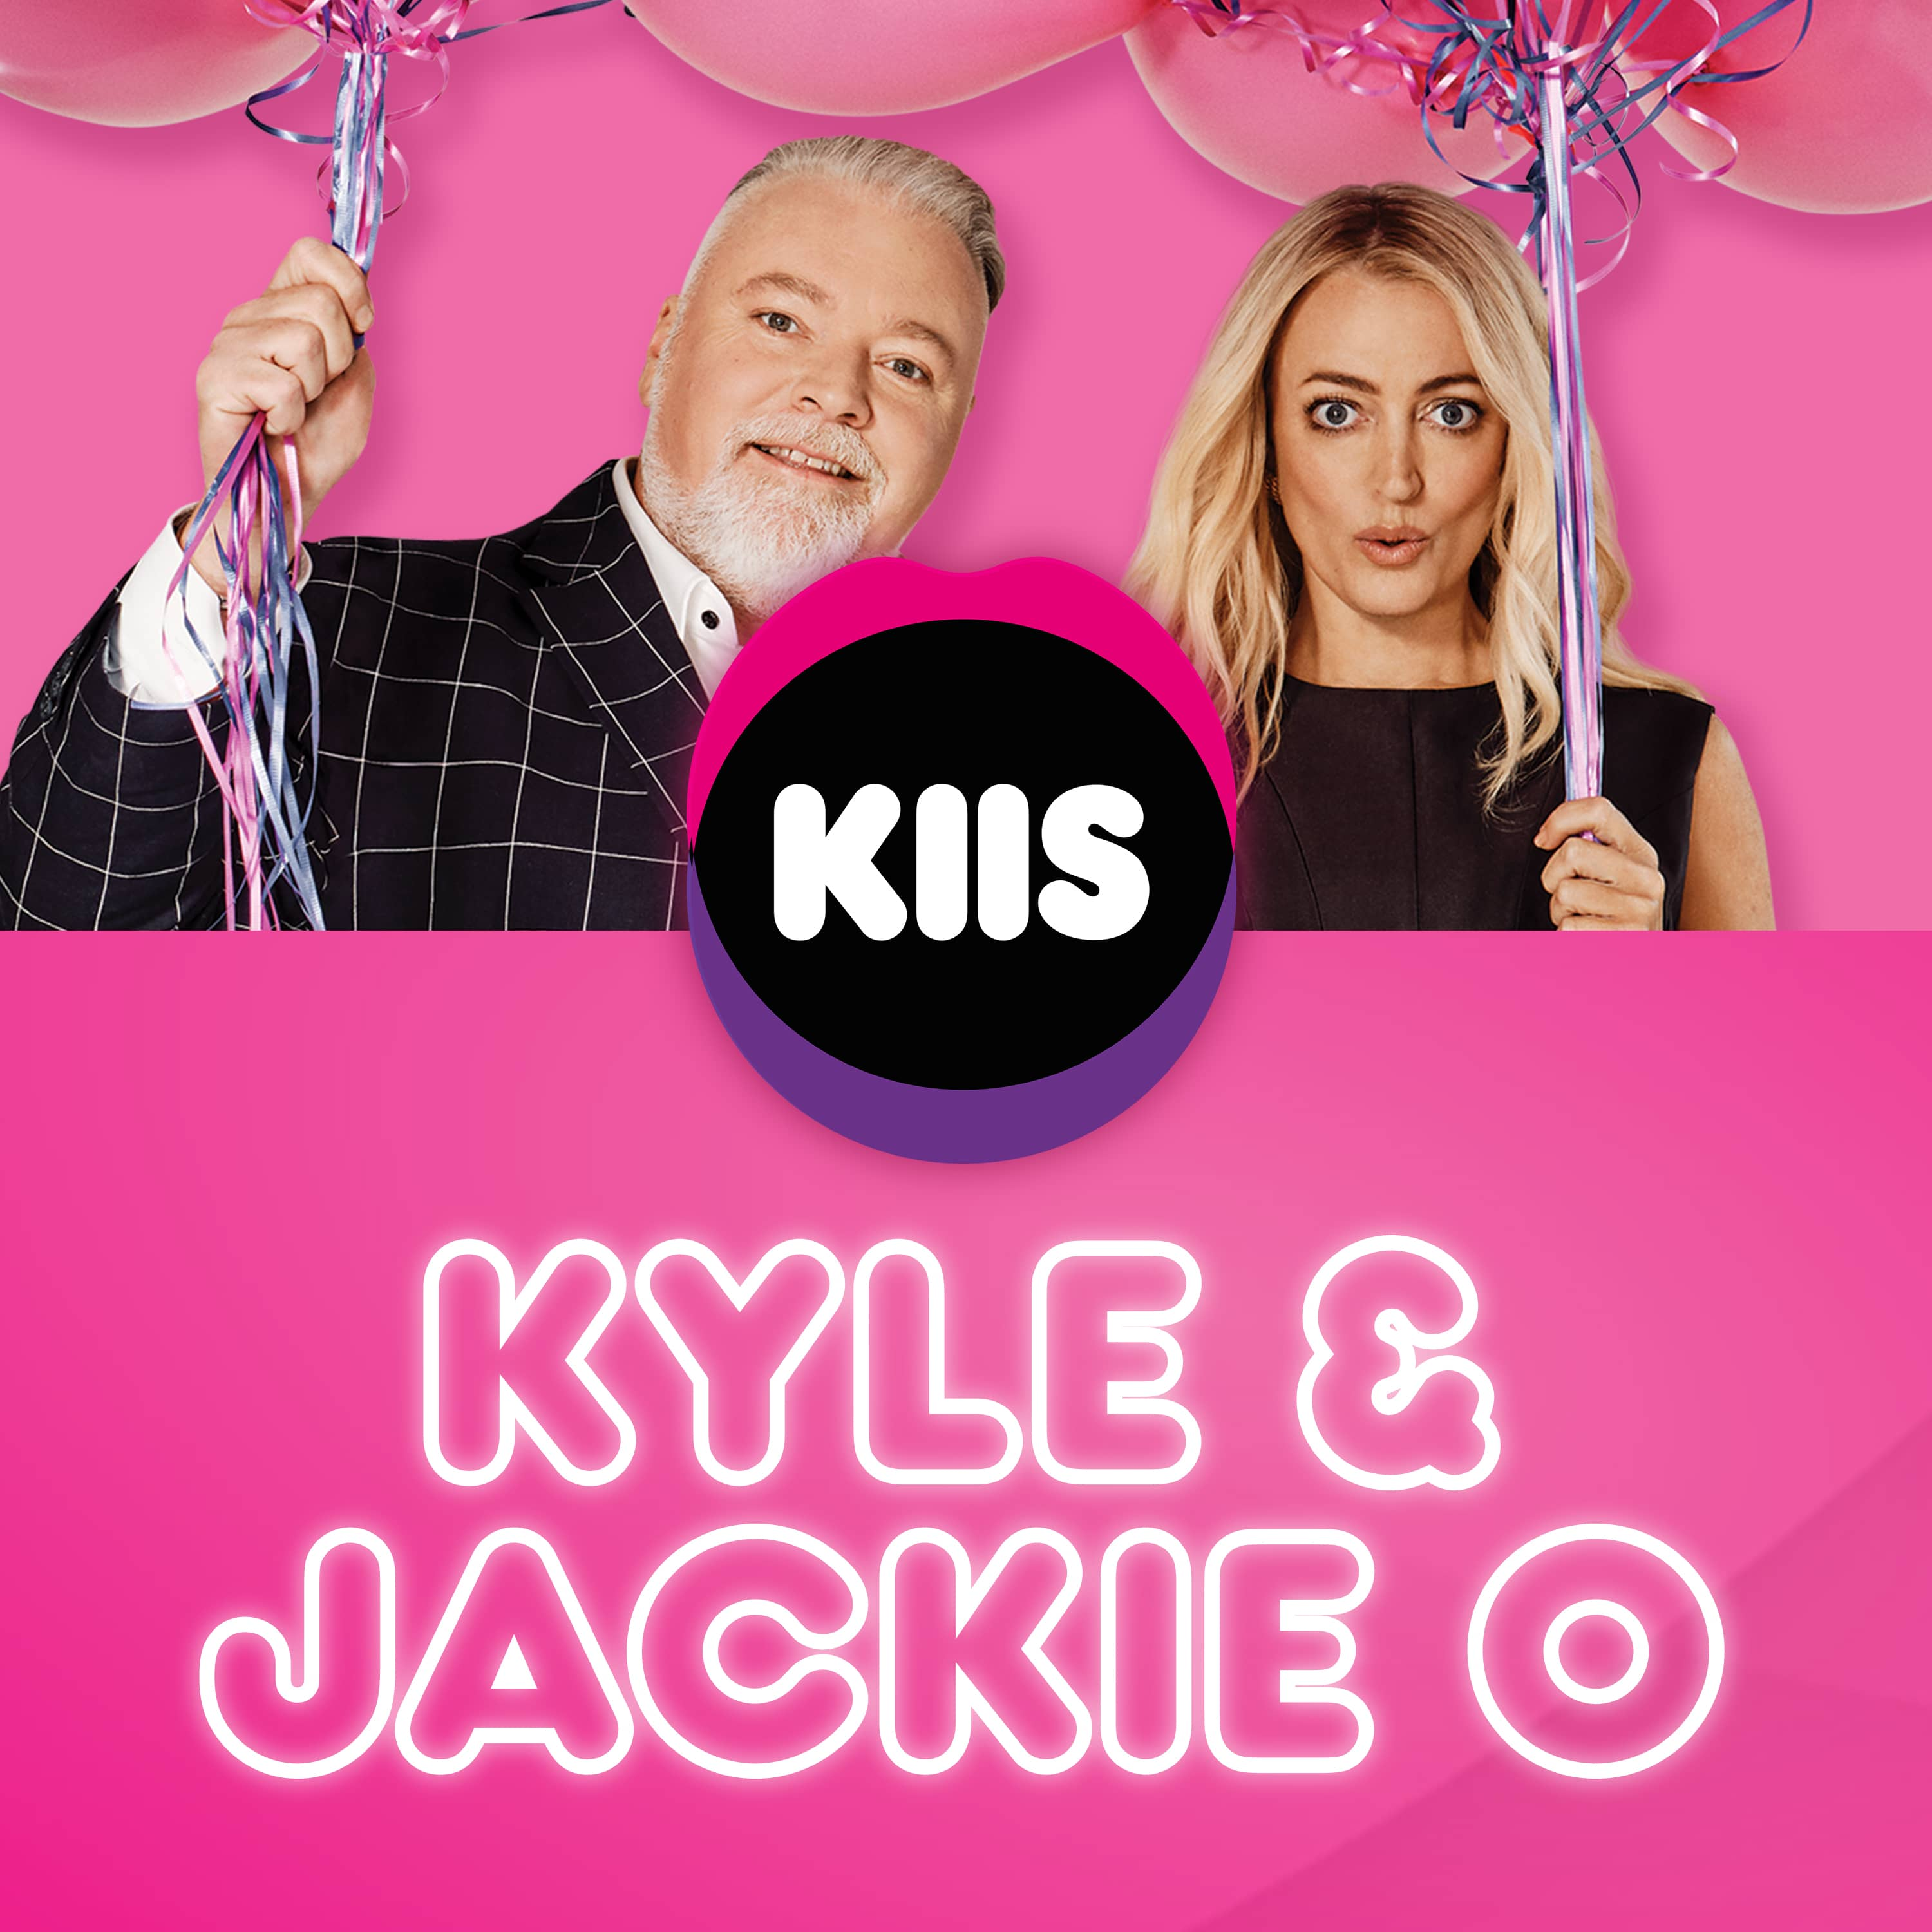 The Kyle & Jackie O Show podcast show image